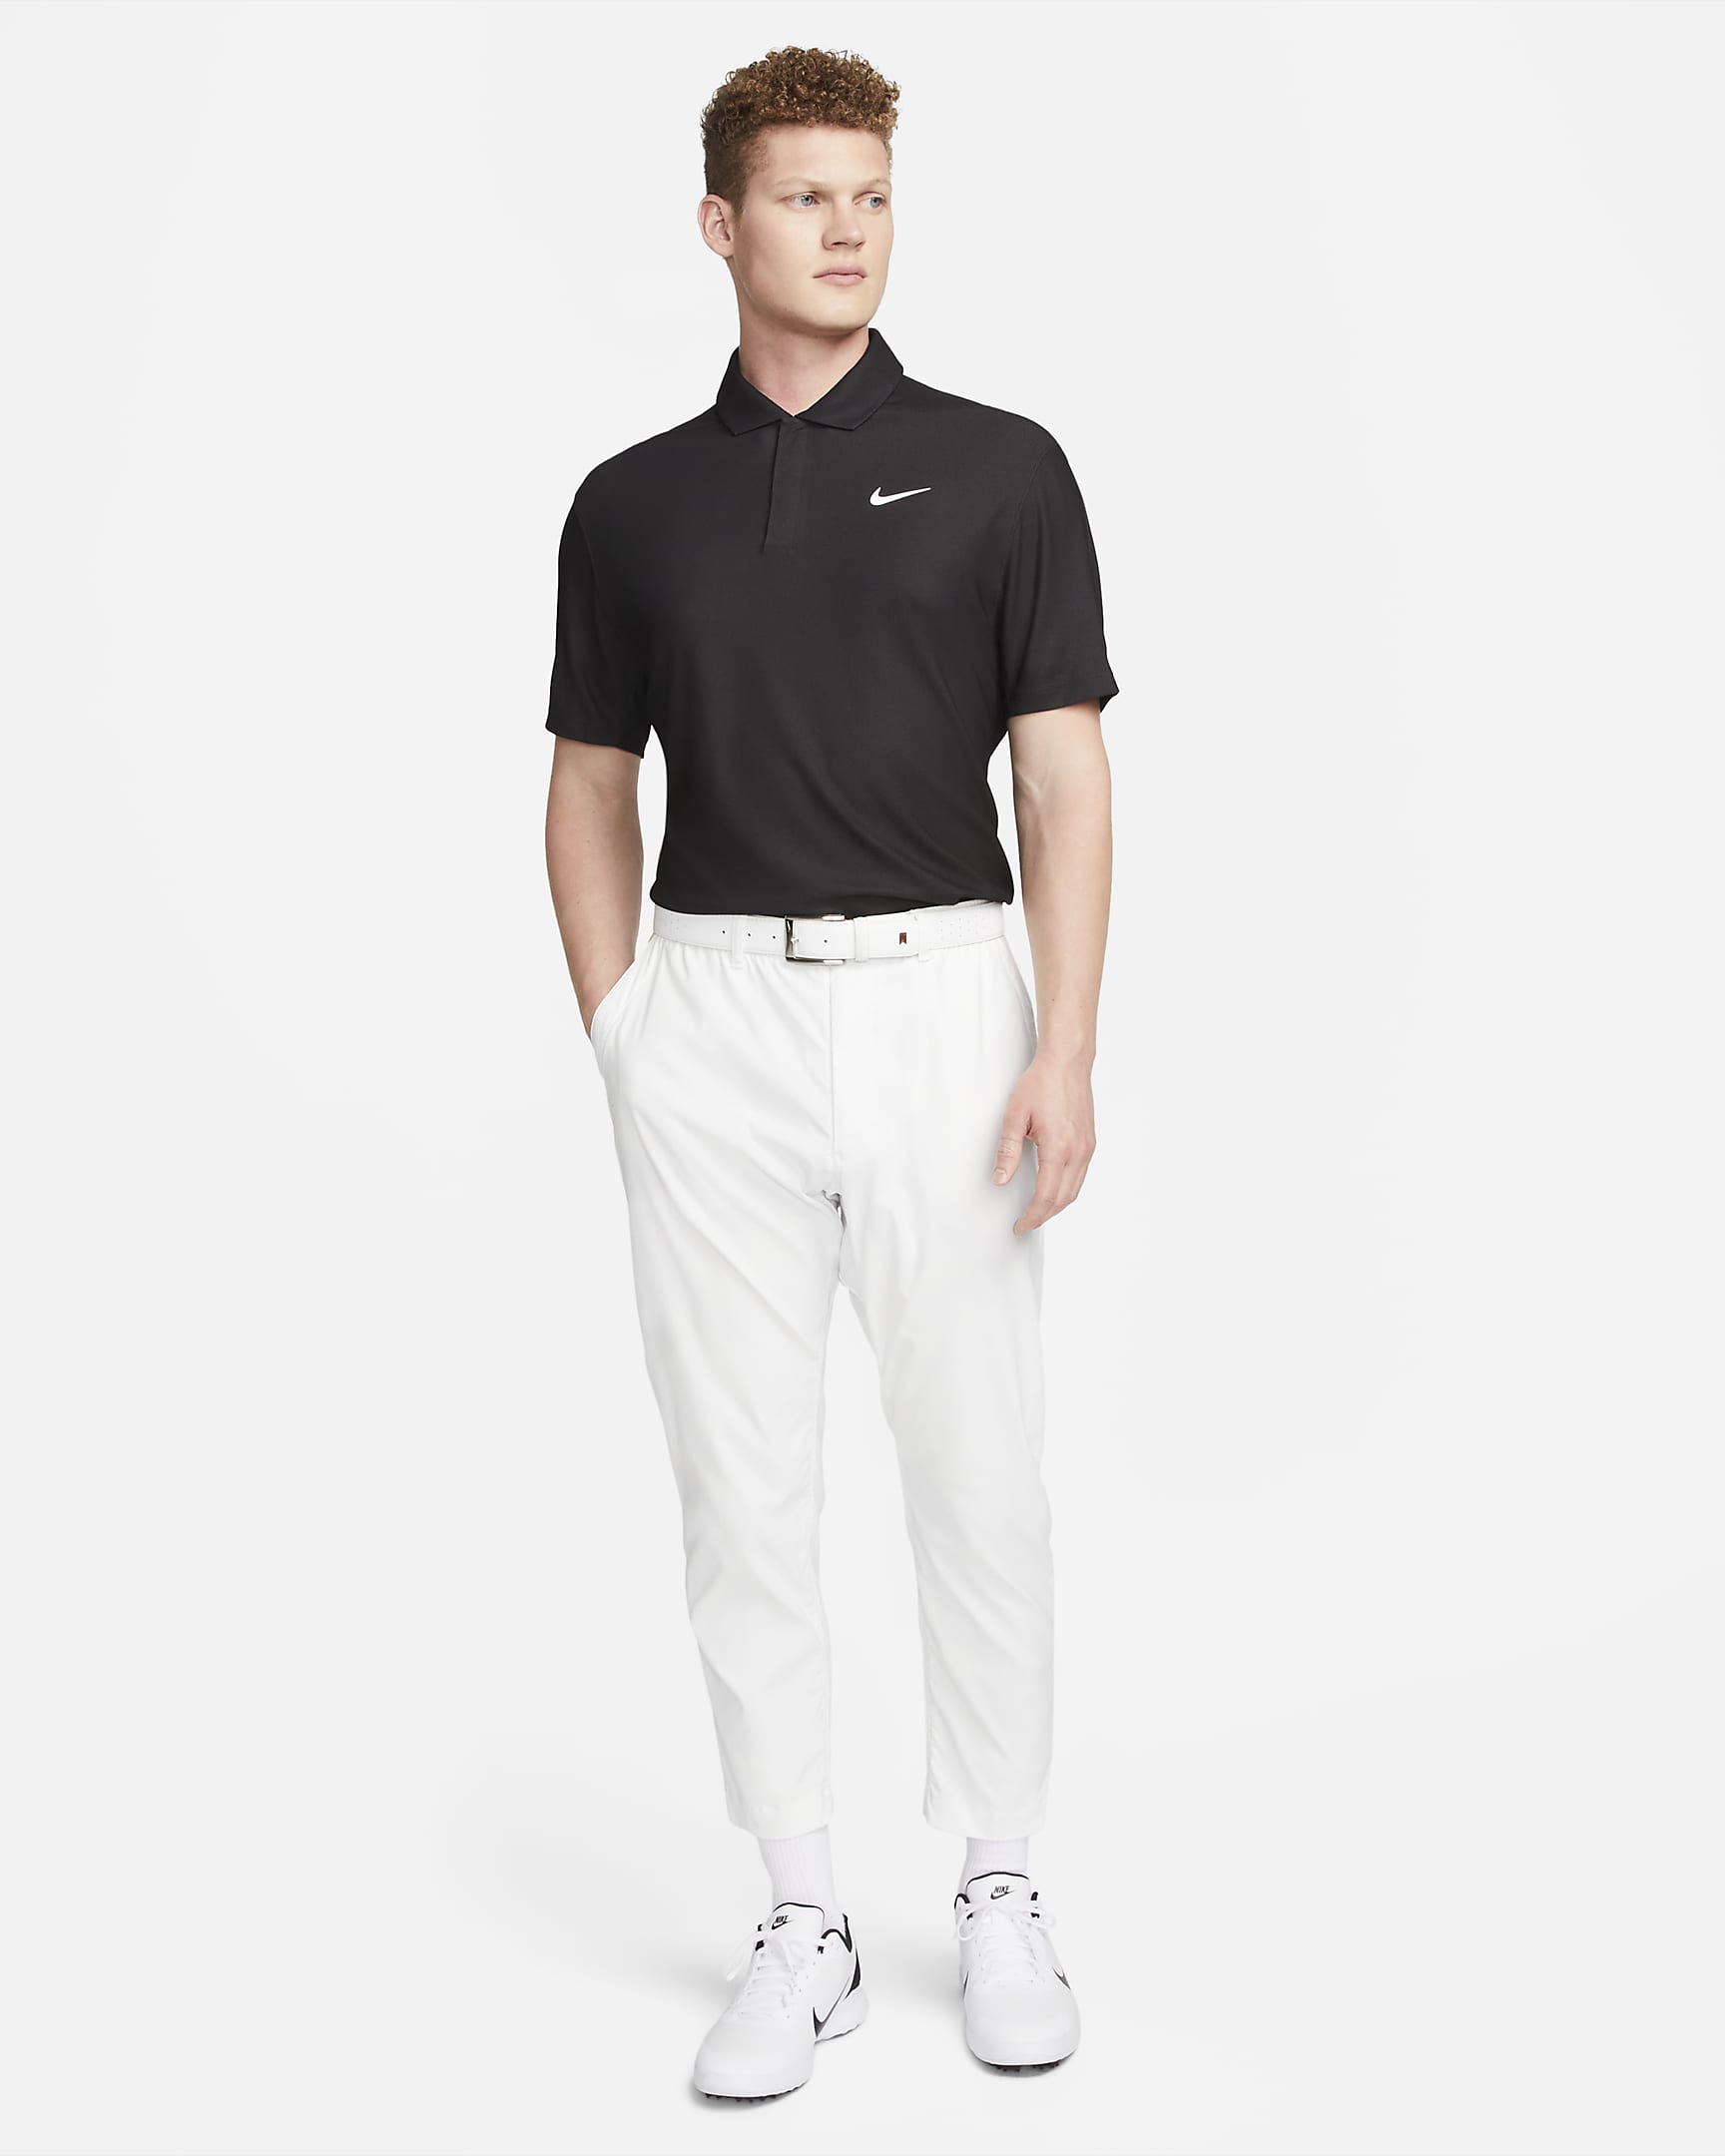 Nike Dri Fit Tiger Woods Men S Golf Polo Nike Uk